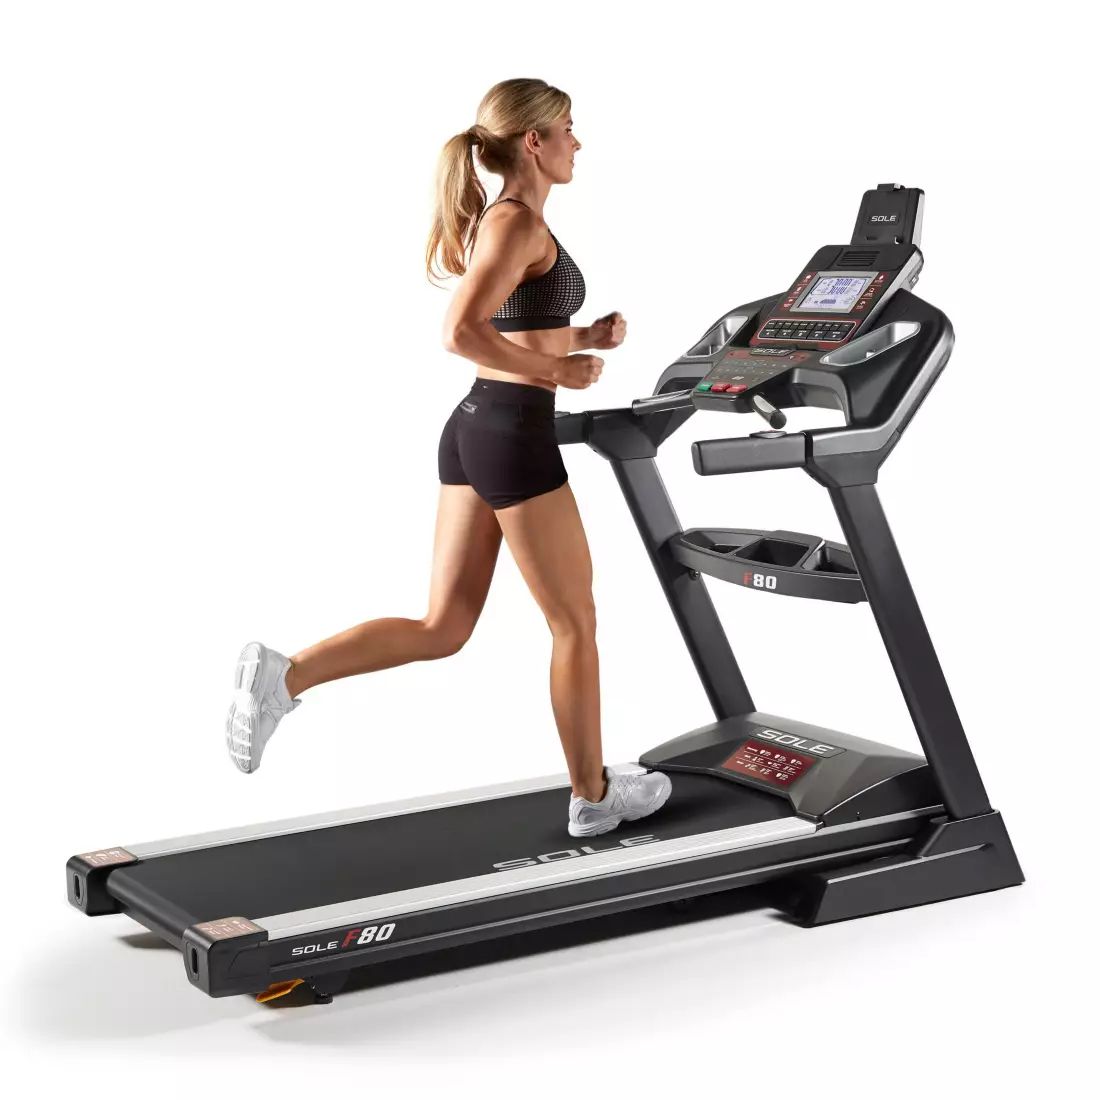 Sole F80 Treadmill | Dick's Sporting Goods